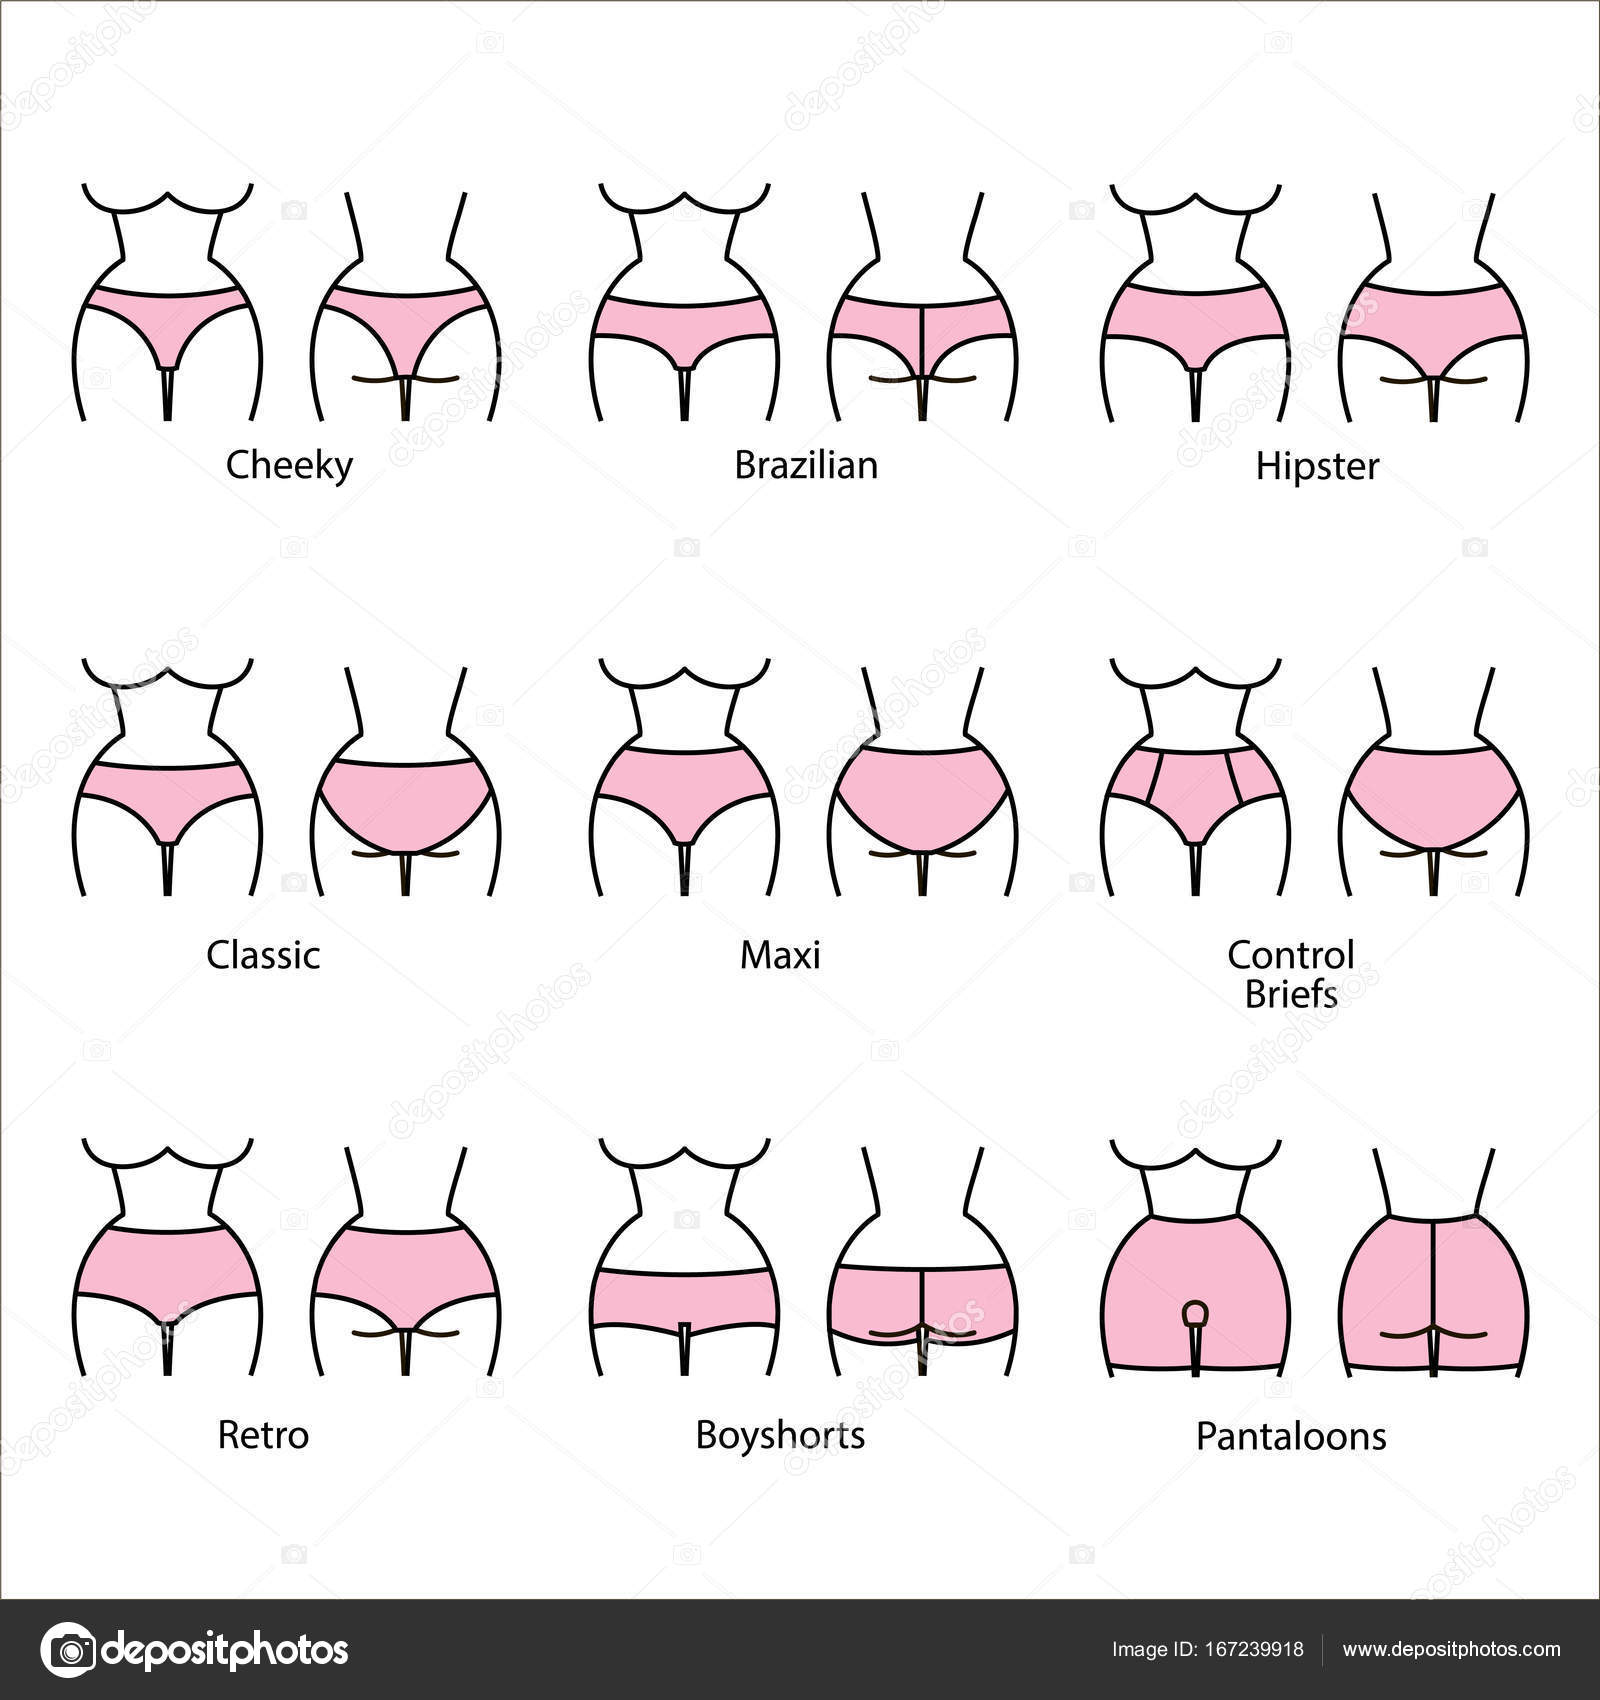 https://st3.depositphotos.com/5740582/16723/v/1600/depositphotos_167239918-stock-illustration-kinds-of-female-panties-icon.jpg